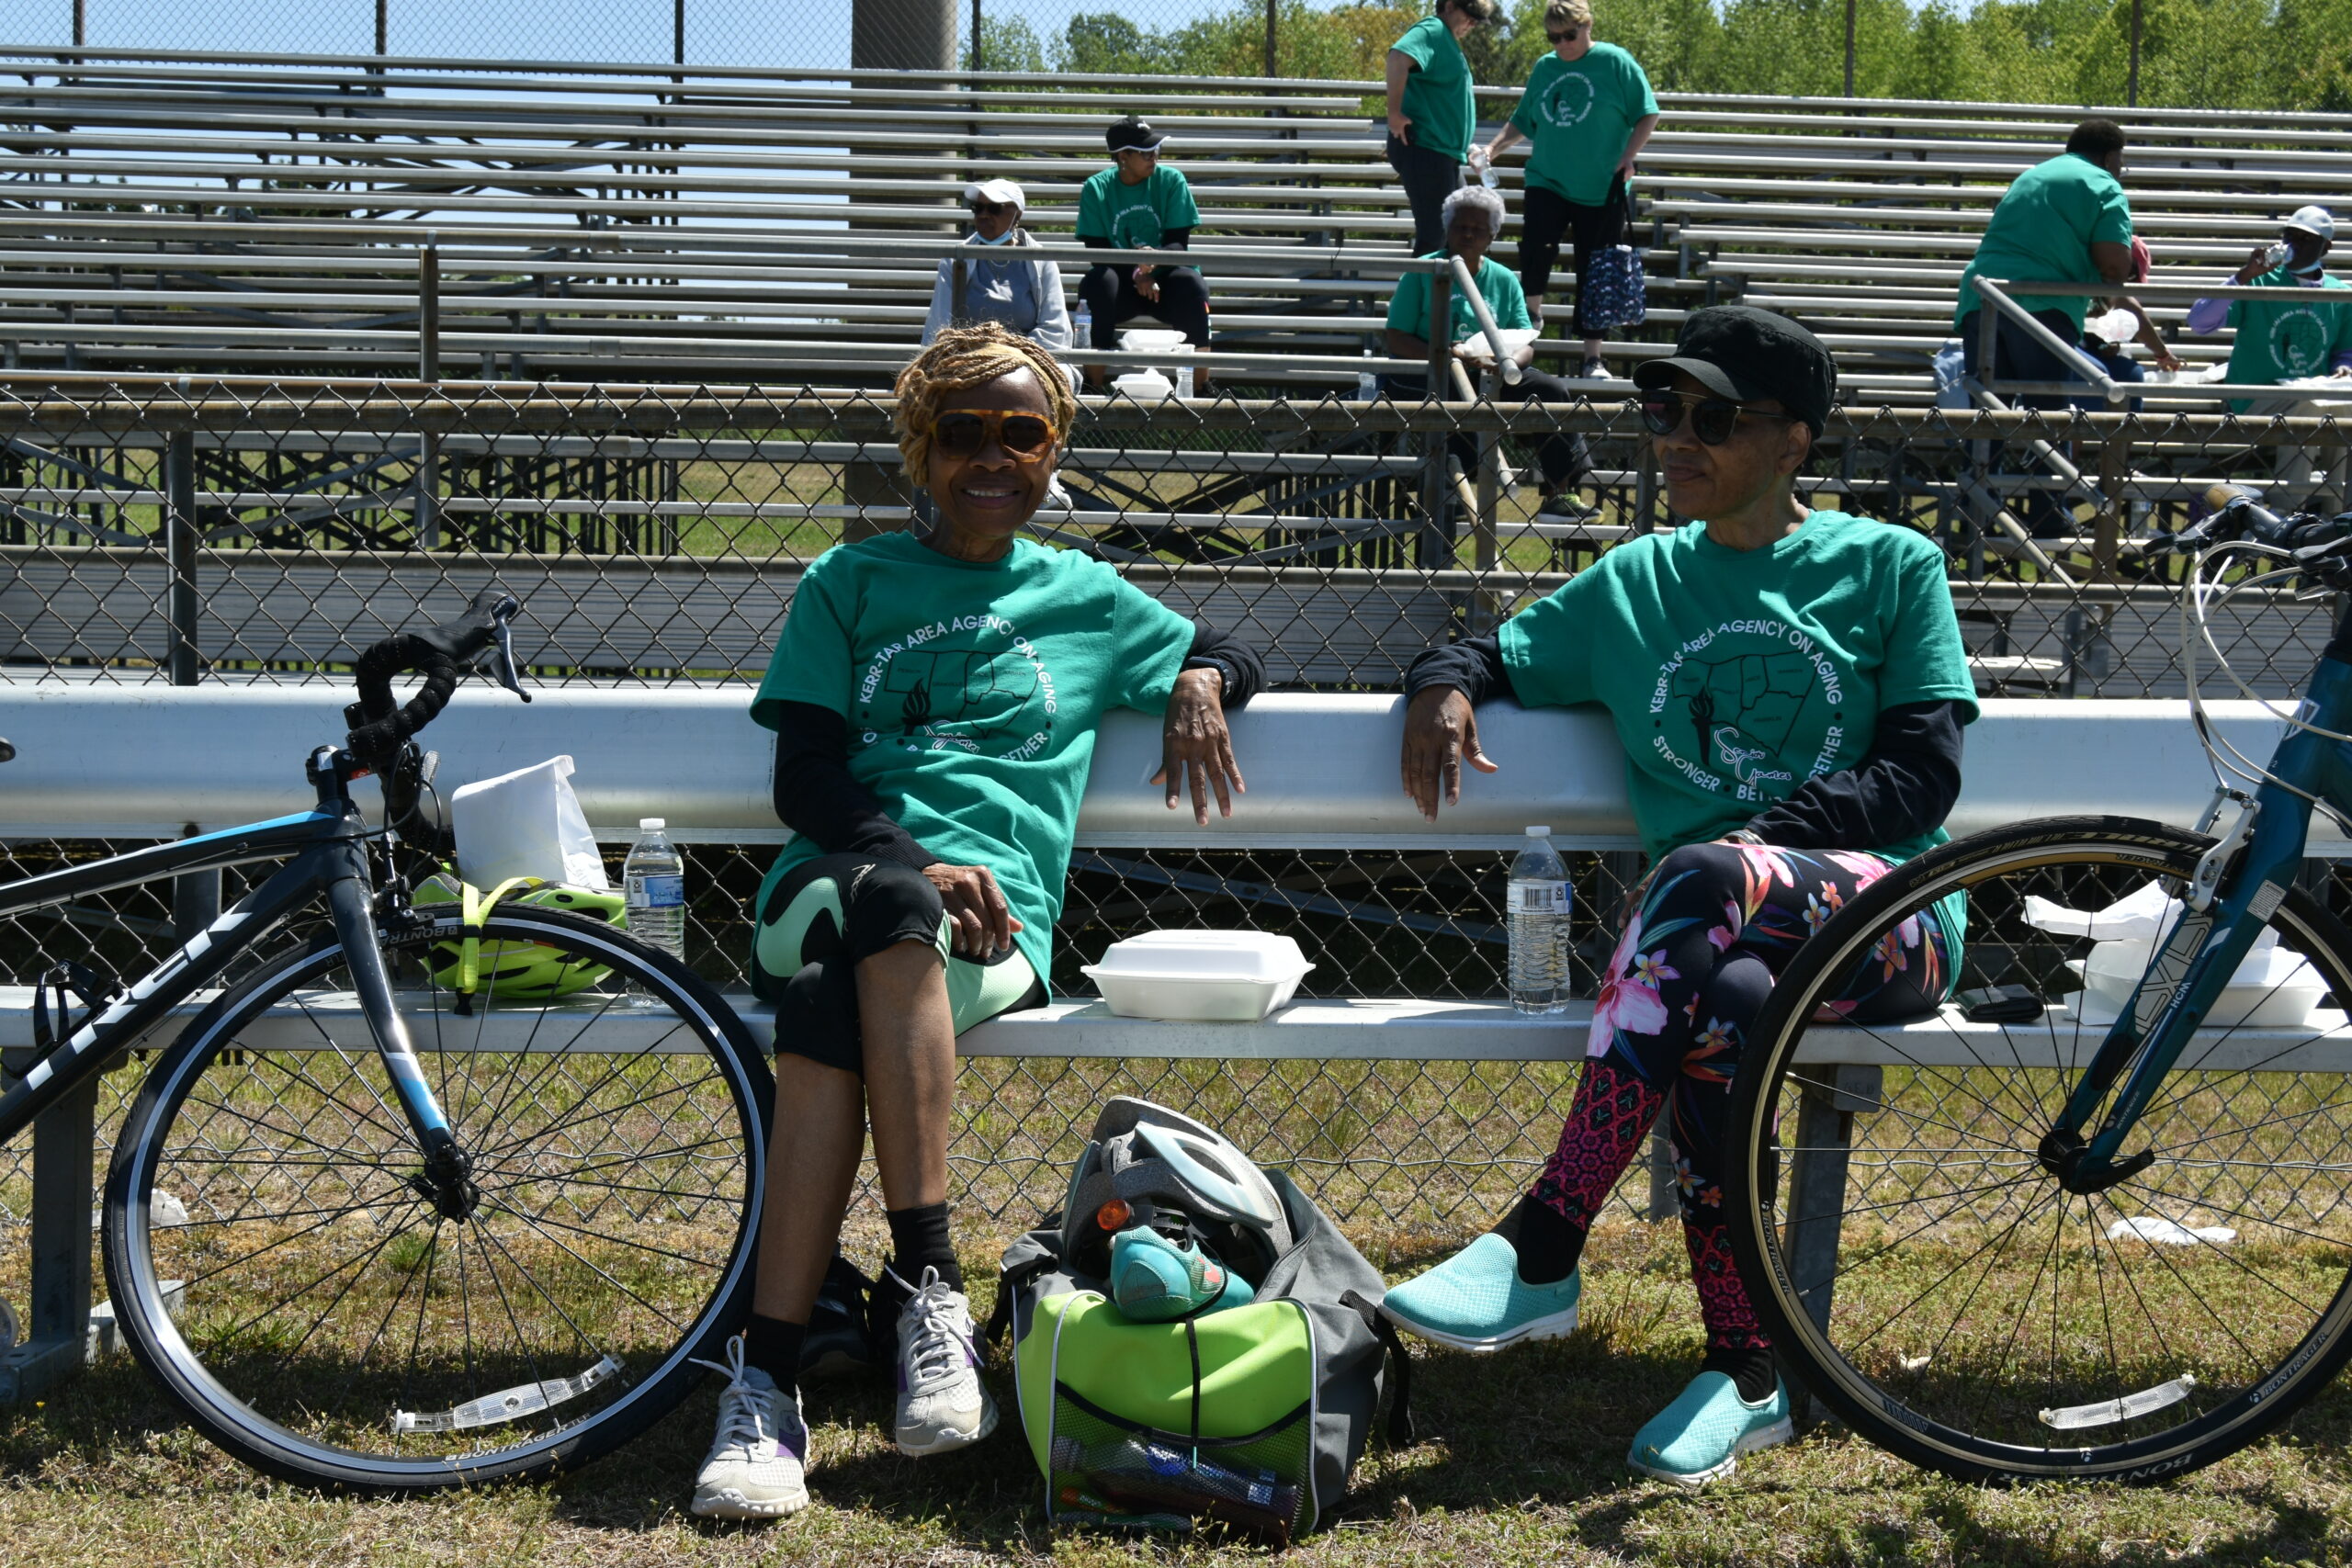 Senior Games cycling participants